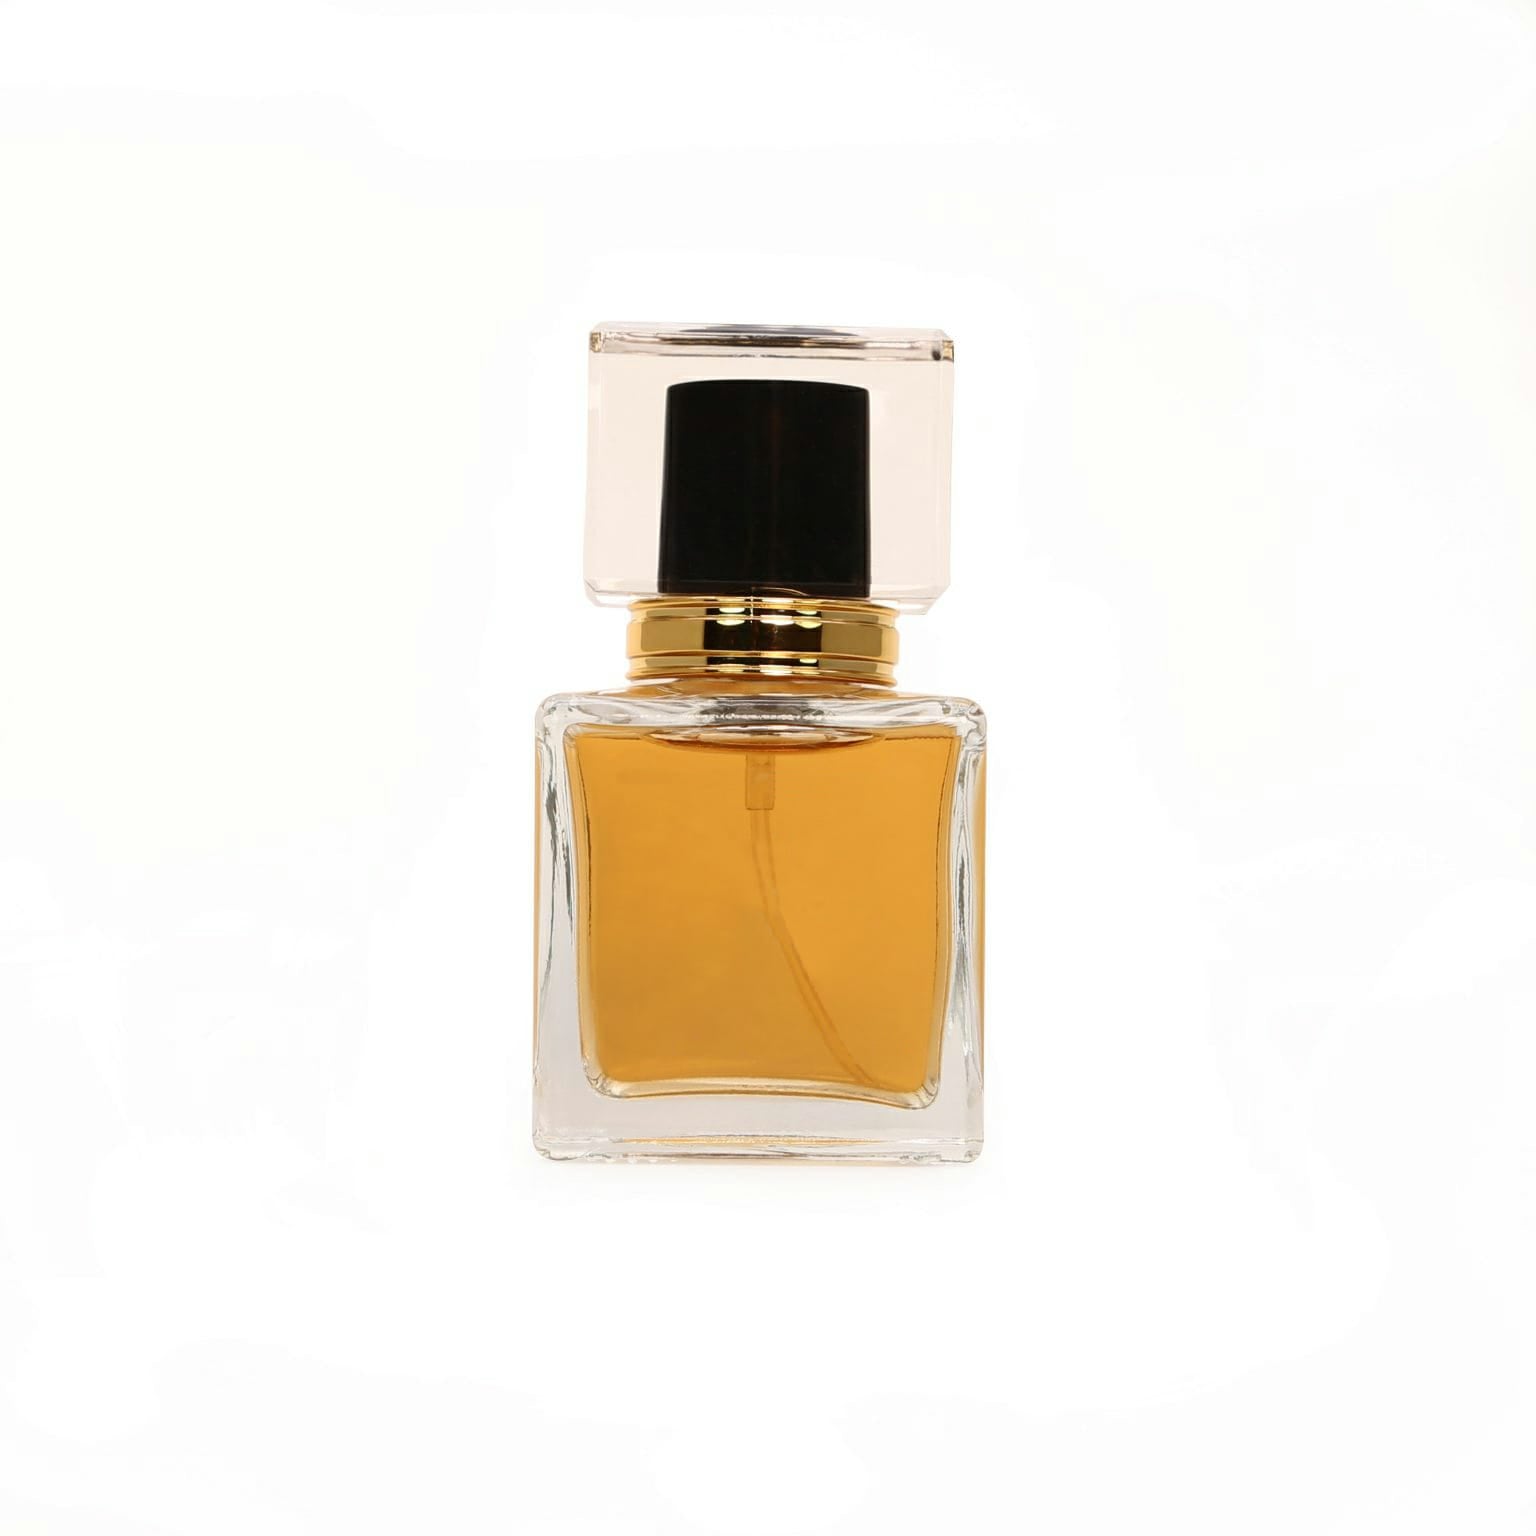 Buy Luxify Scent Bleu De Chanel Perfume, Gold Edition